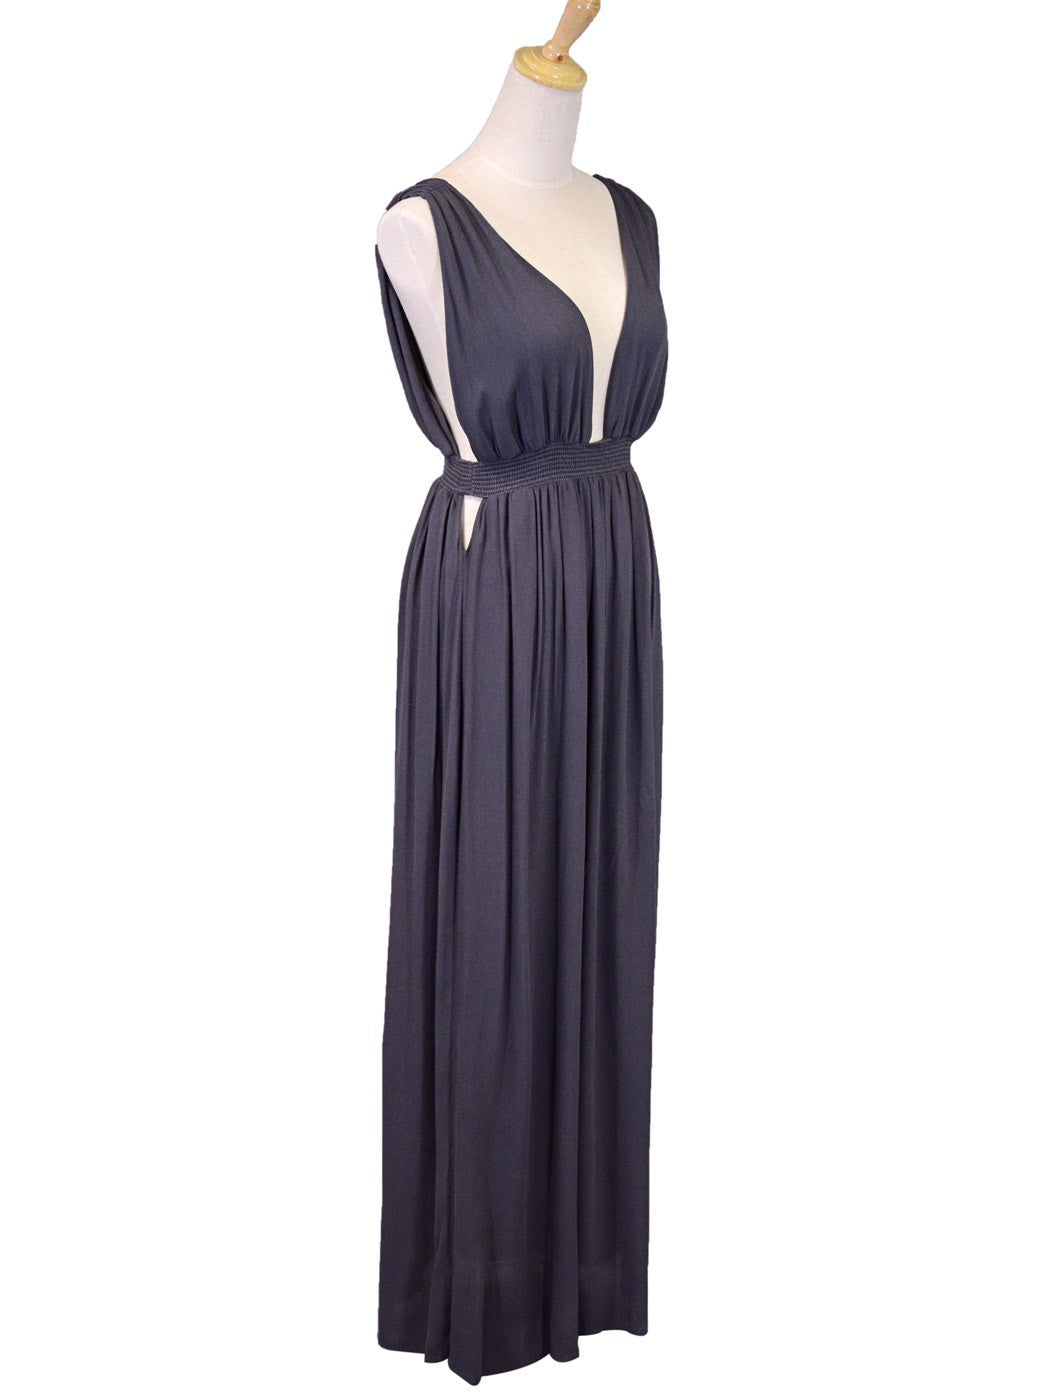 Audrey 3+1 Elegant Goddess Deep V-Neckline Sleeveless Dress With Low Cut Back - ALILANG.COM